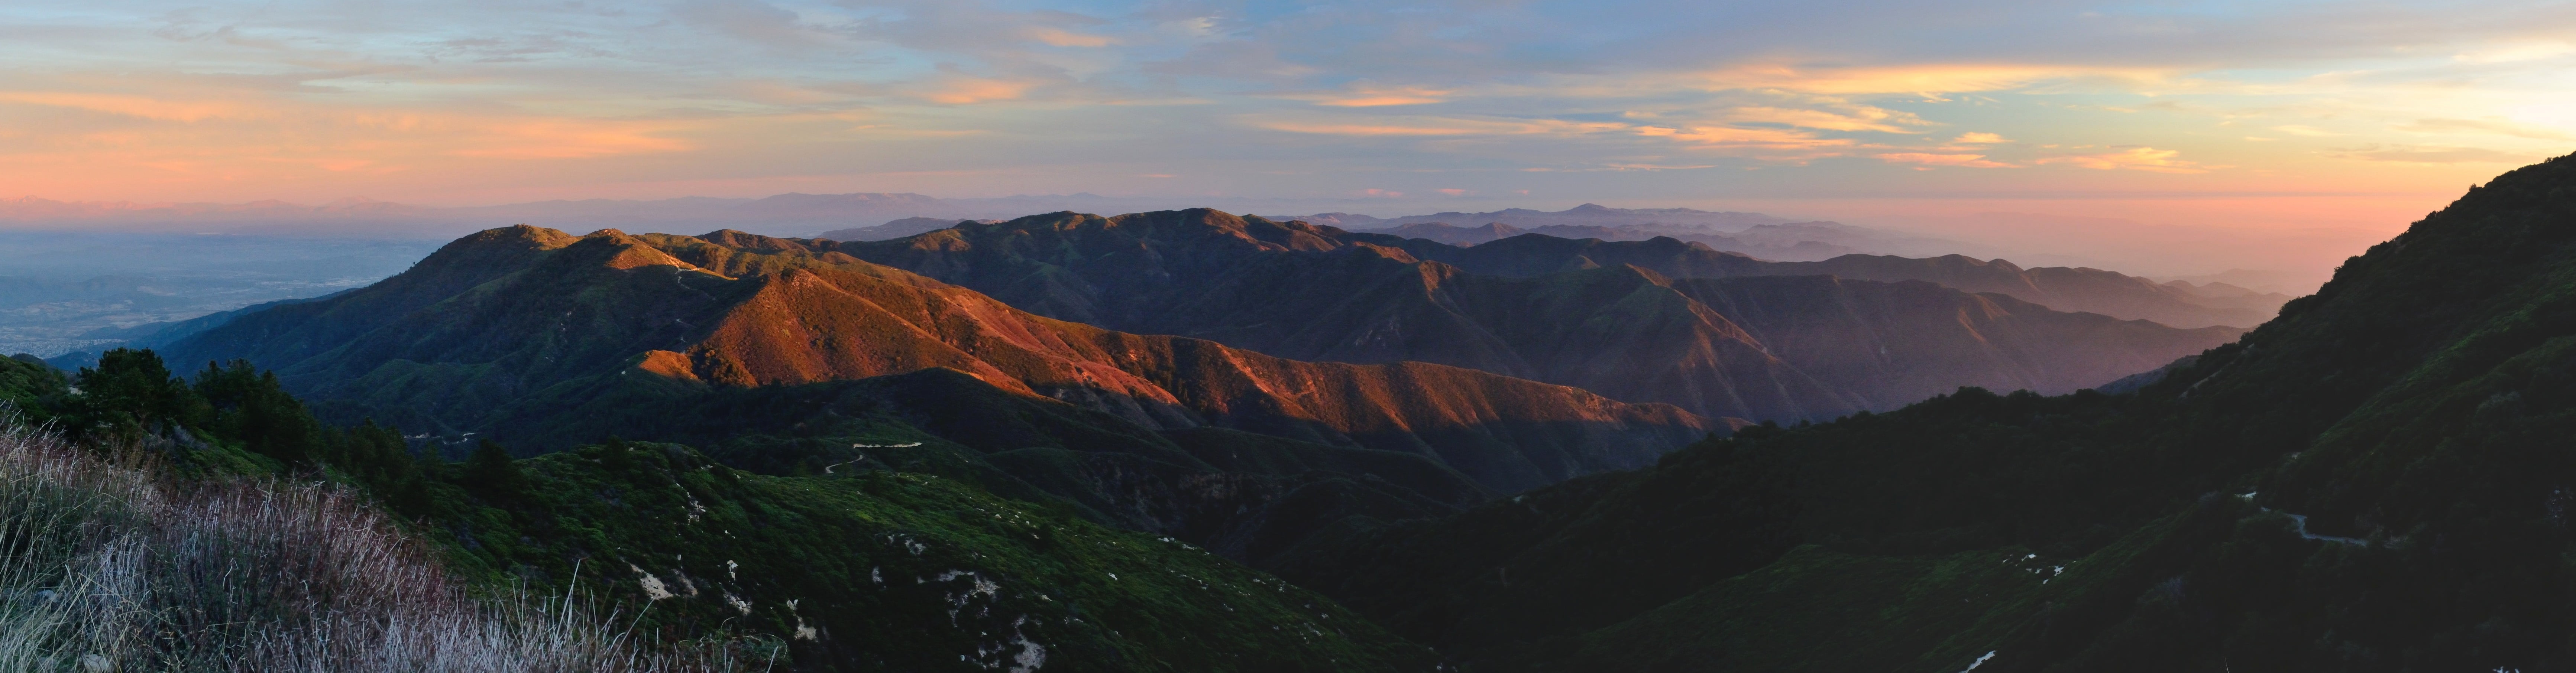 sunset santiago peak landscape photography brown wallpaper